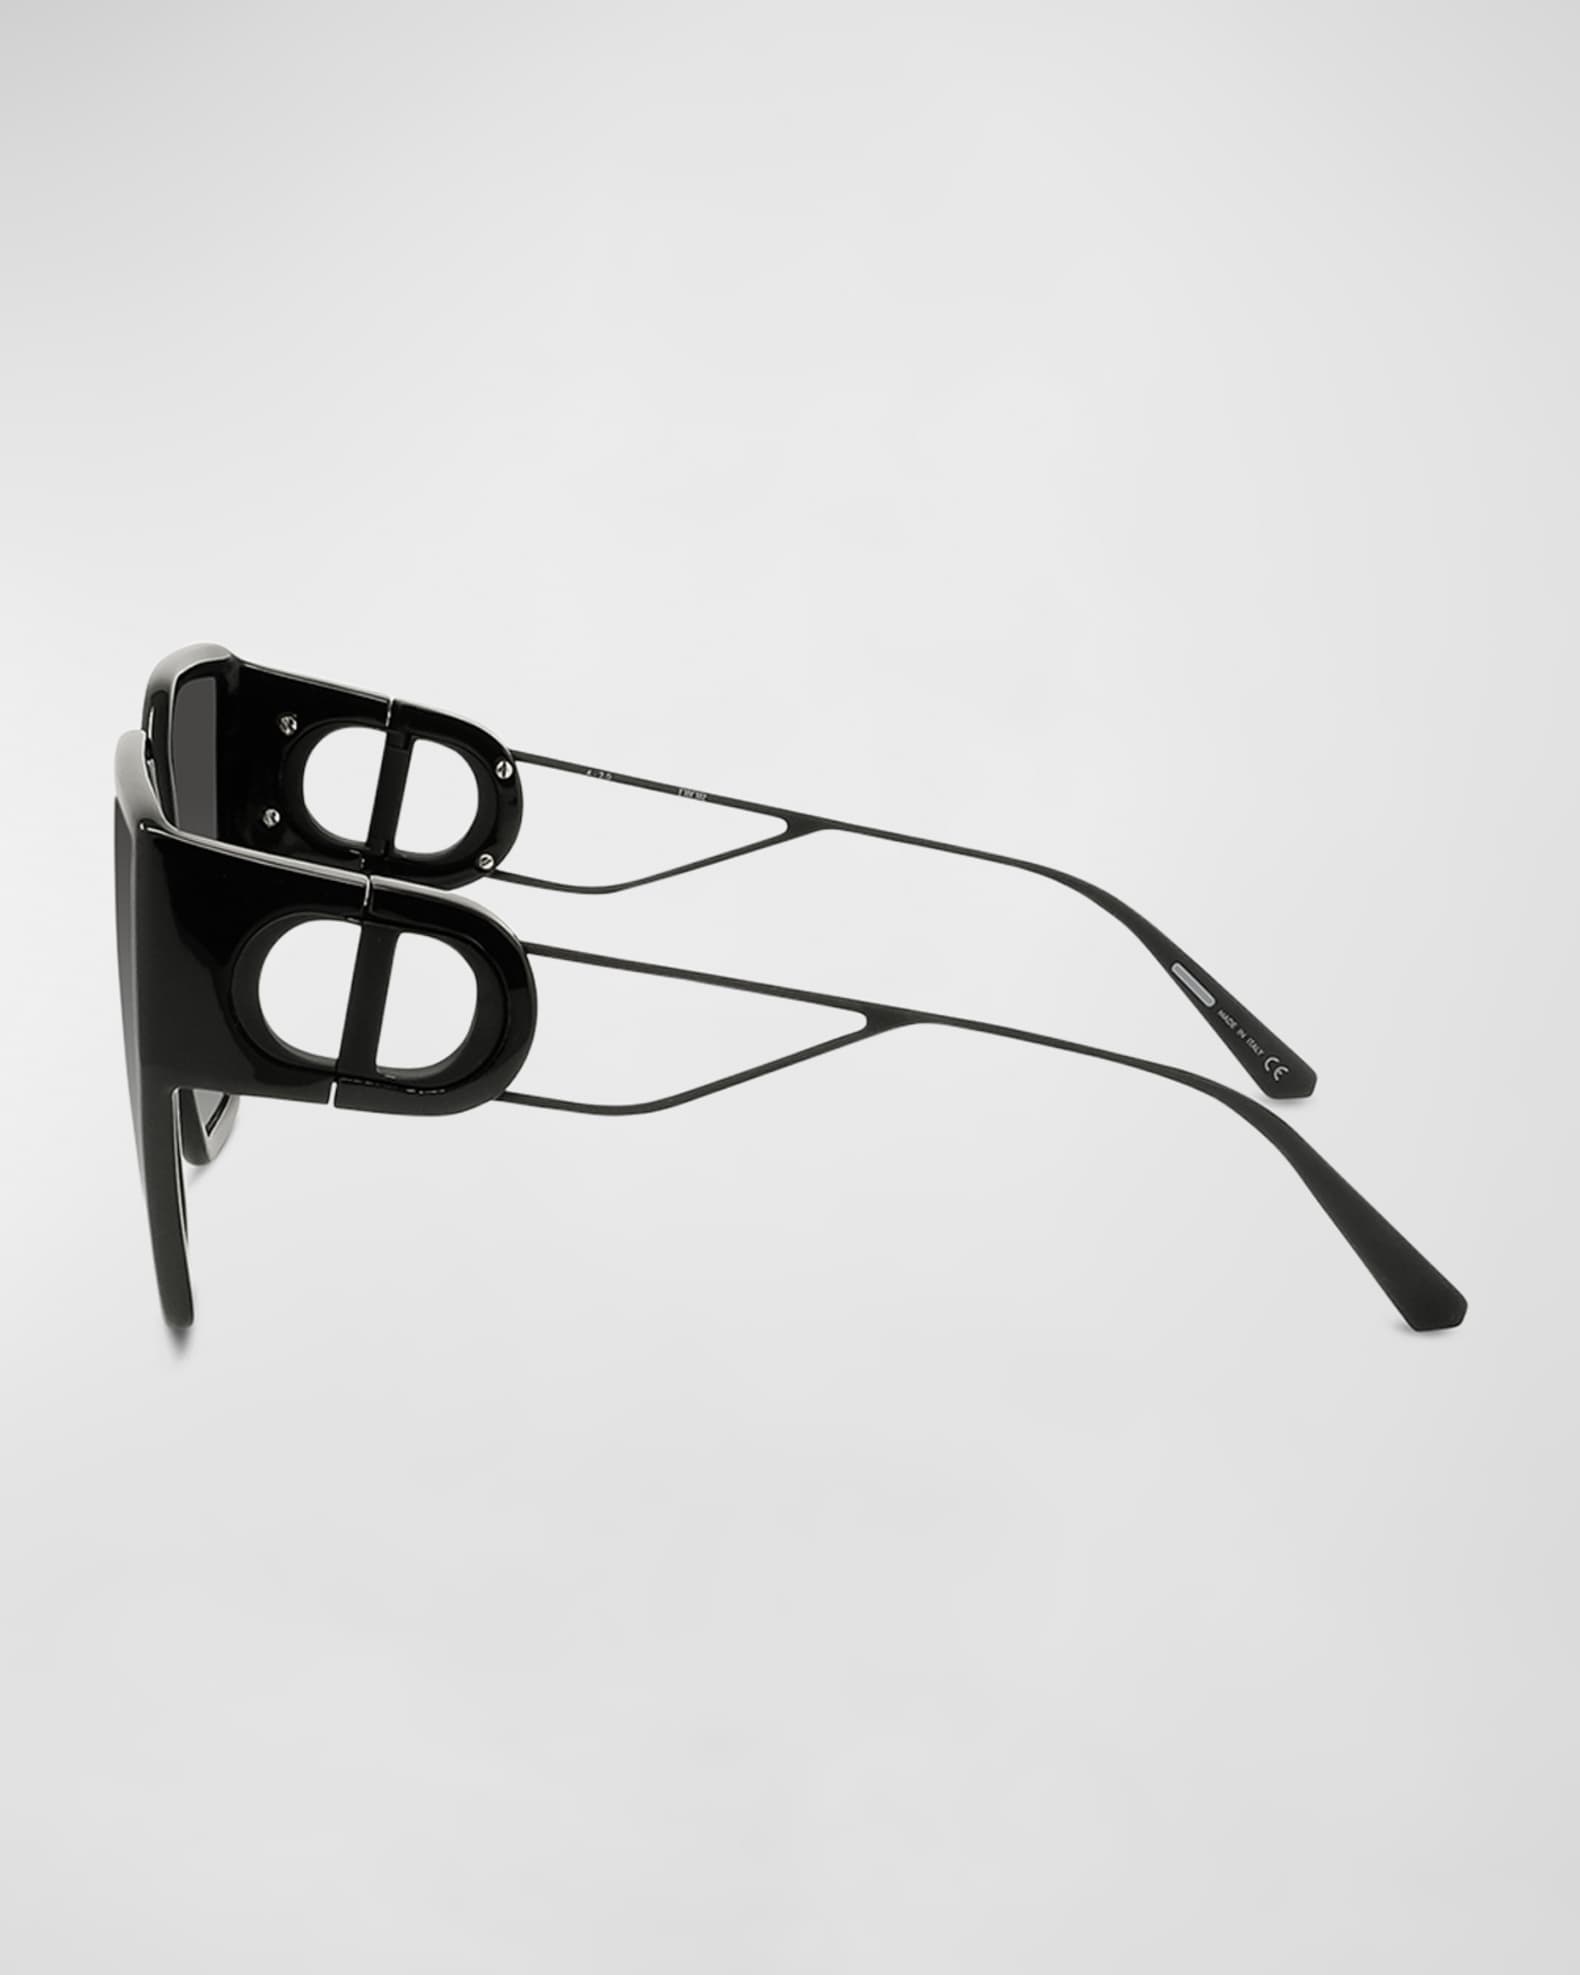 से𝙭𝙮 𝙎𝙪𝙣𝙣𝙞𝙚𝙨 🤩😎 🕶 all new sunglasses - Urban